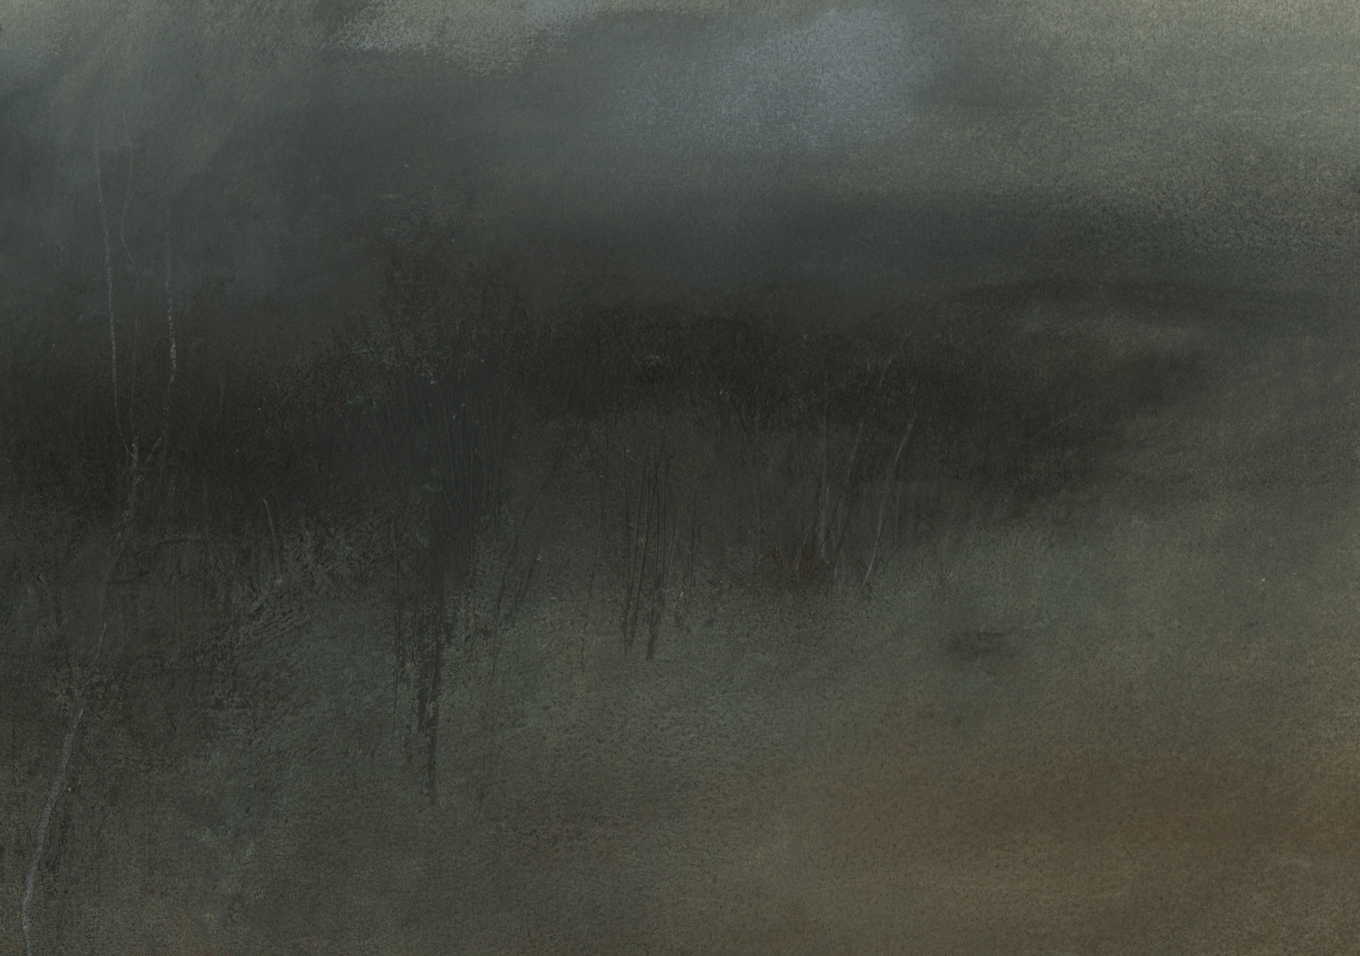 Nicholas Herbert, British Artist - Landscape L975, Sharpenhoe Series, Field Edge, The Chiltern Hills, contemporary mixed media painting